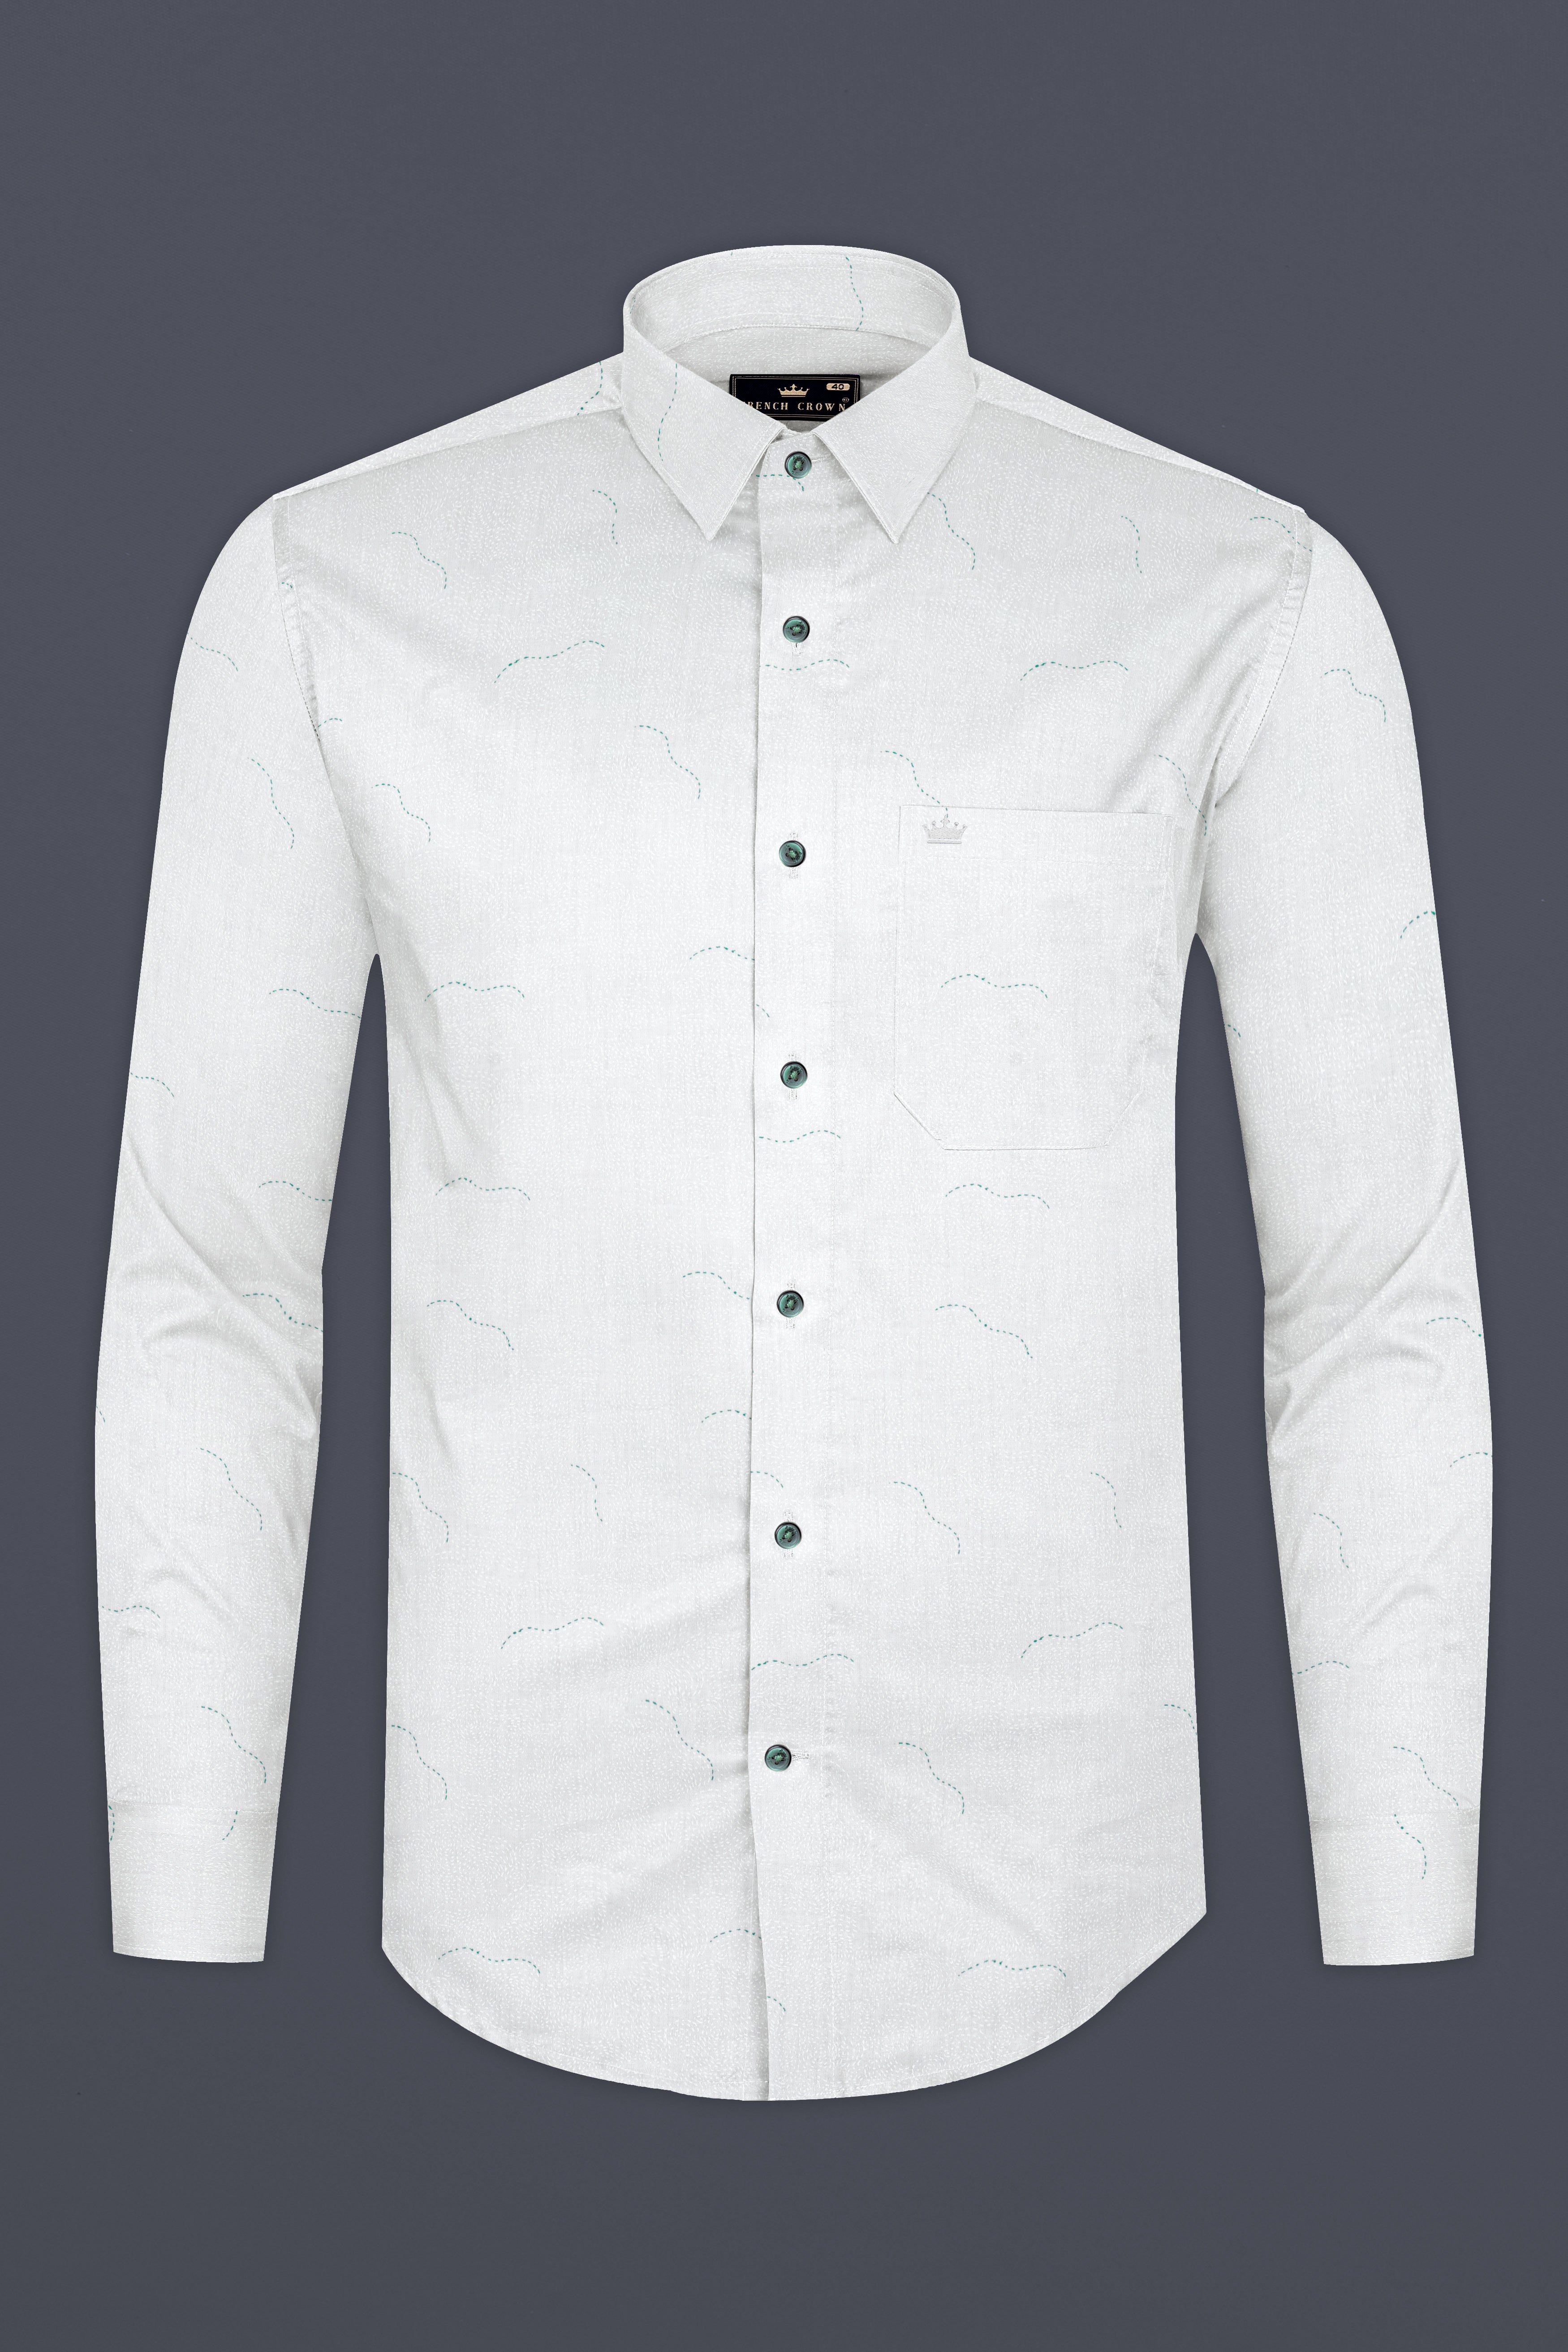 Bright White Super Soft Arc Printed Premium Cotton Shirt